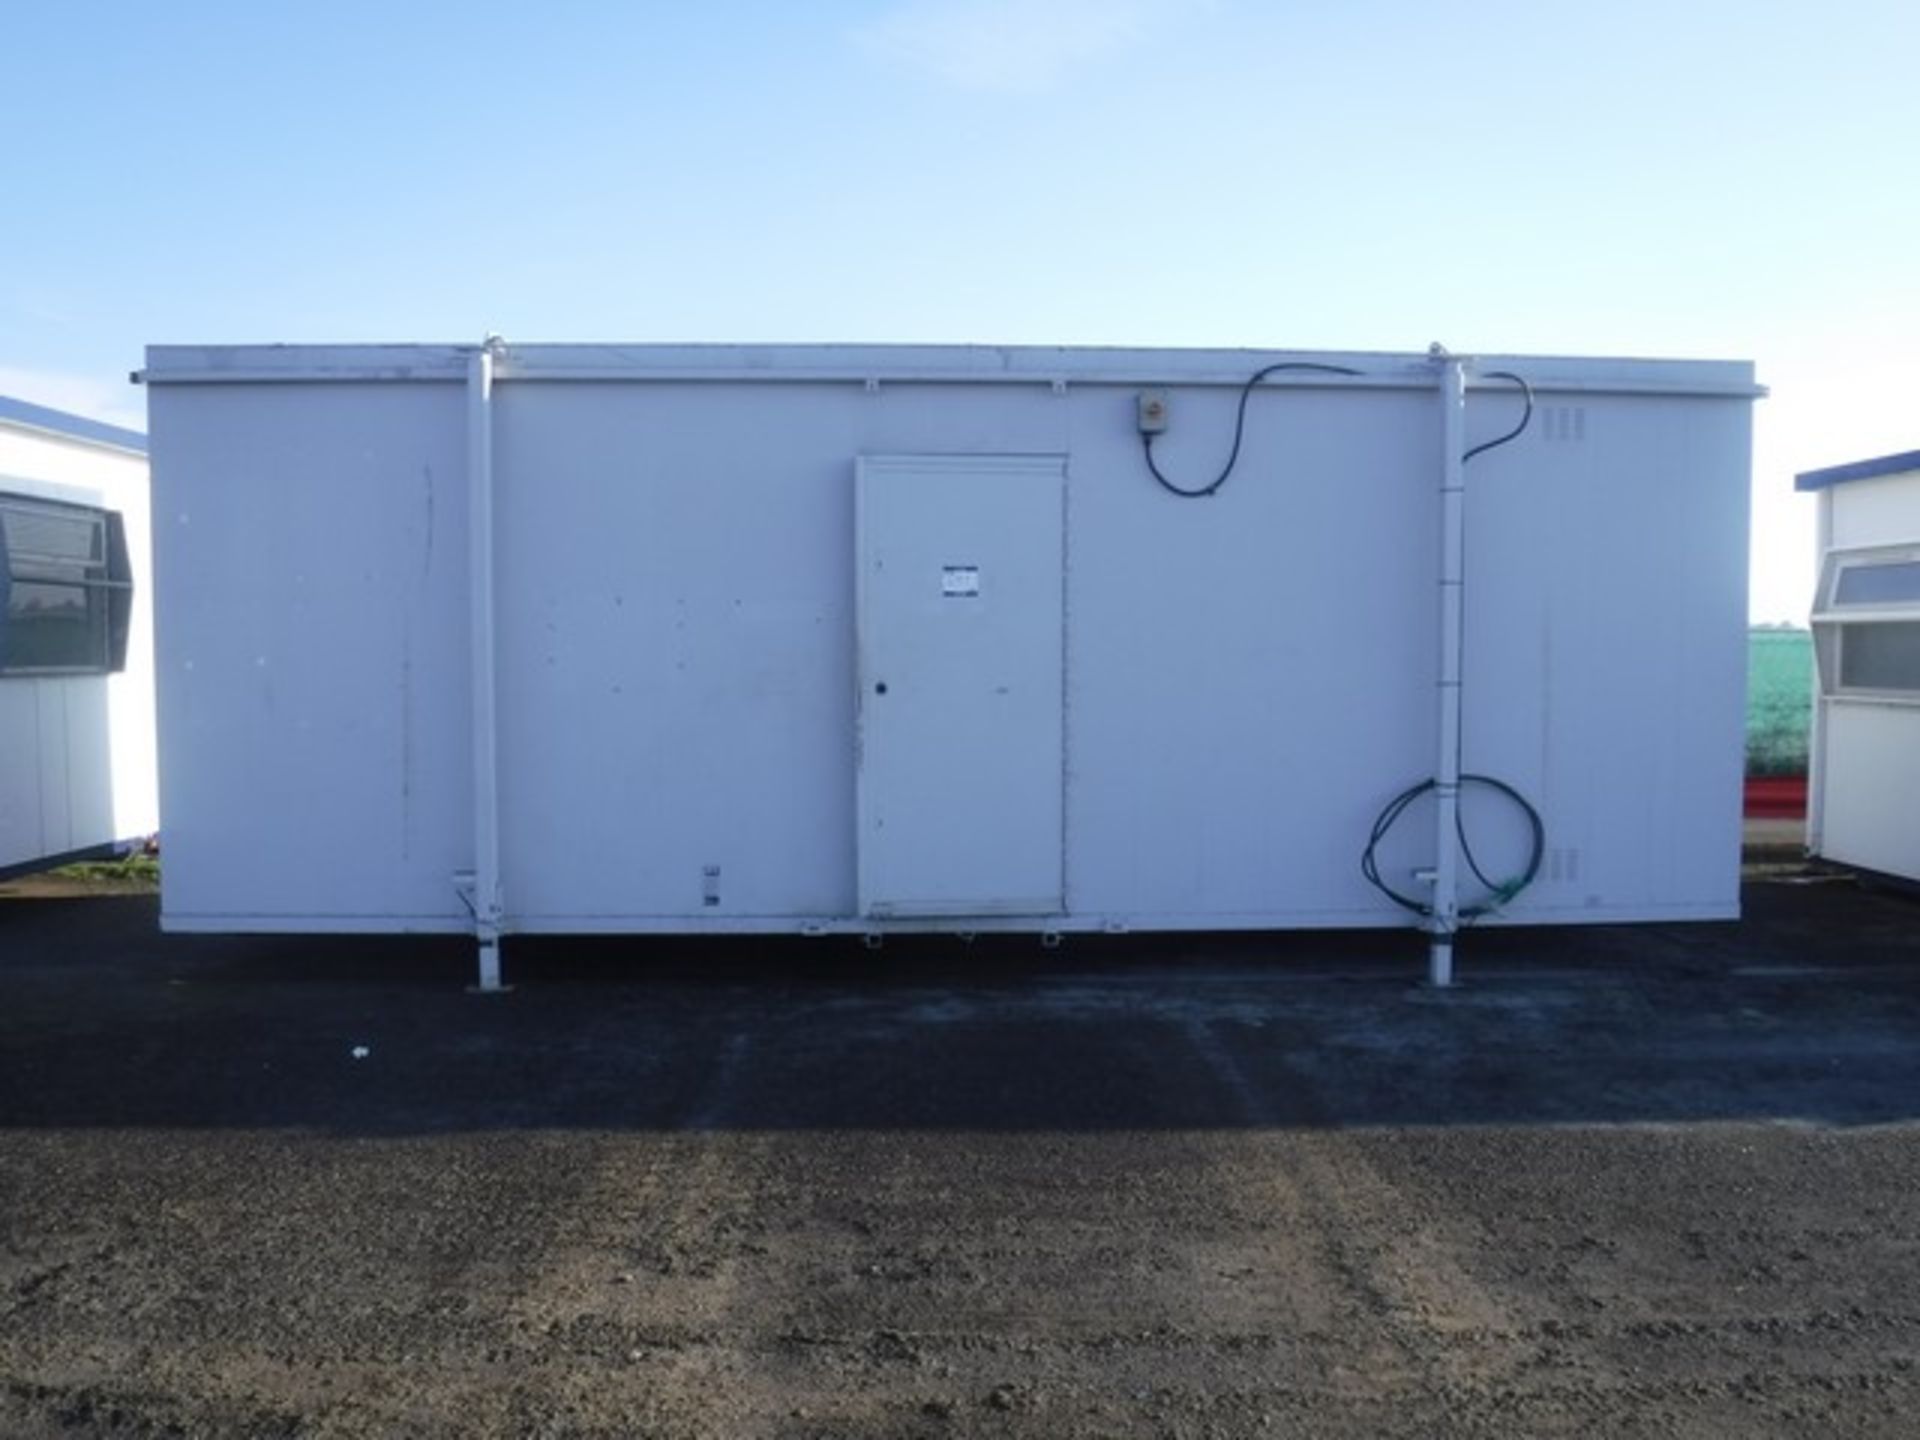 THURSTON 24' x 10' anti-vandal canteen cabin c/w water heater, sink, worktop S/N M35404. Keys in off